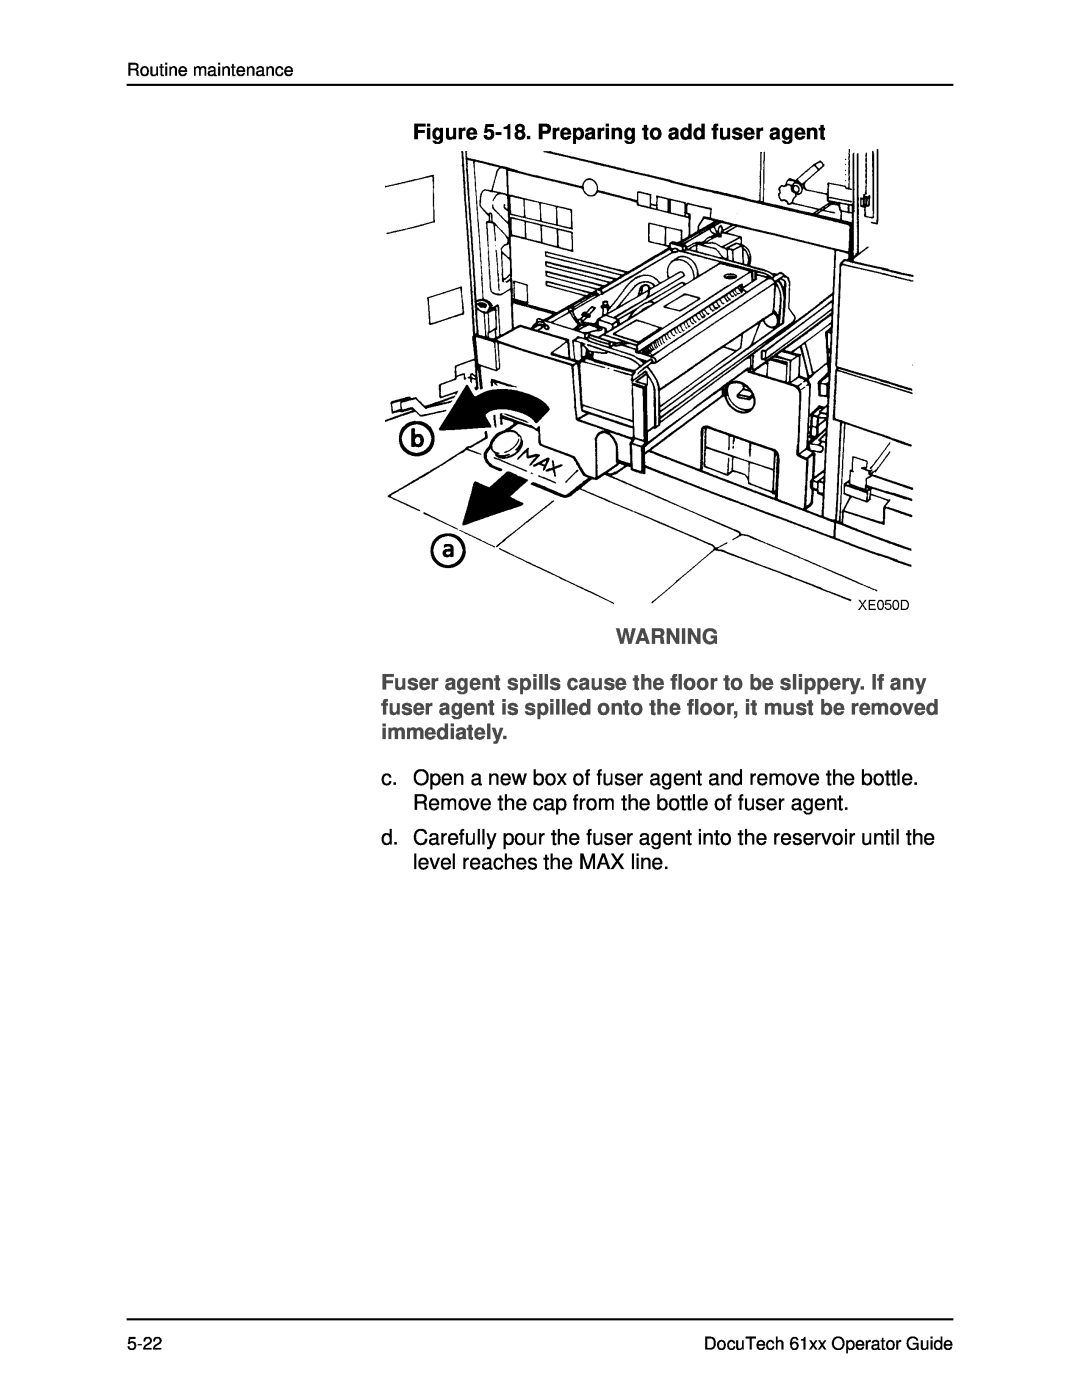 Xerox 61xx manual 18. Preparing to add fuser agent 